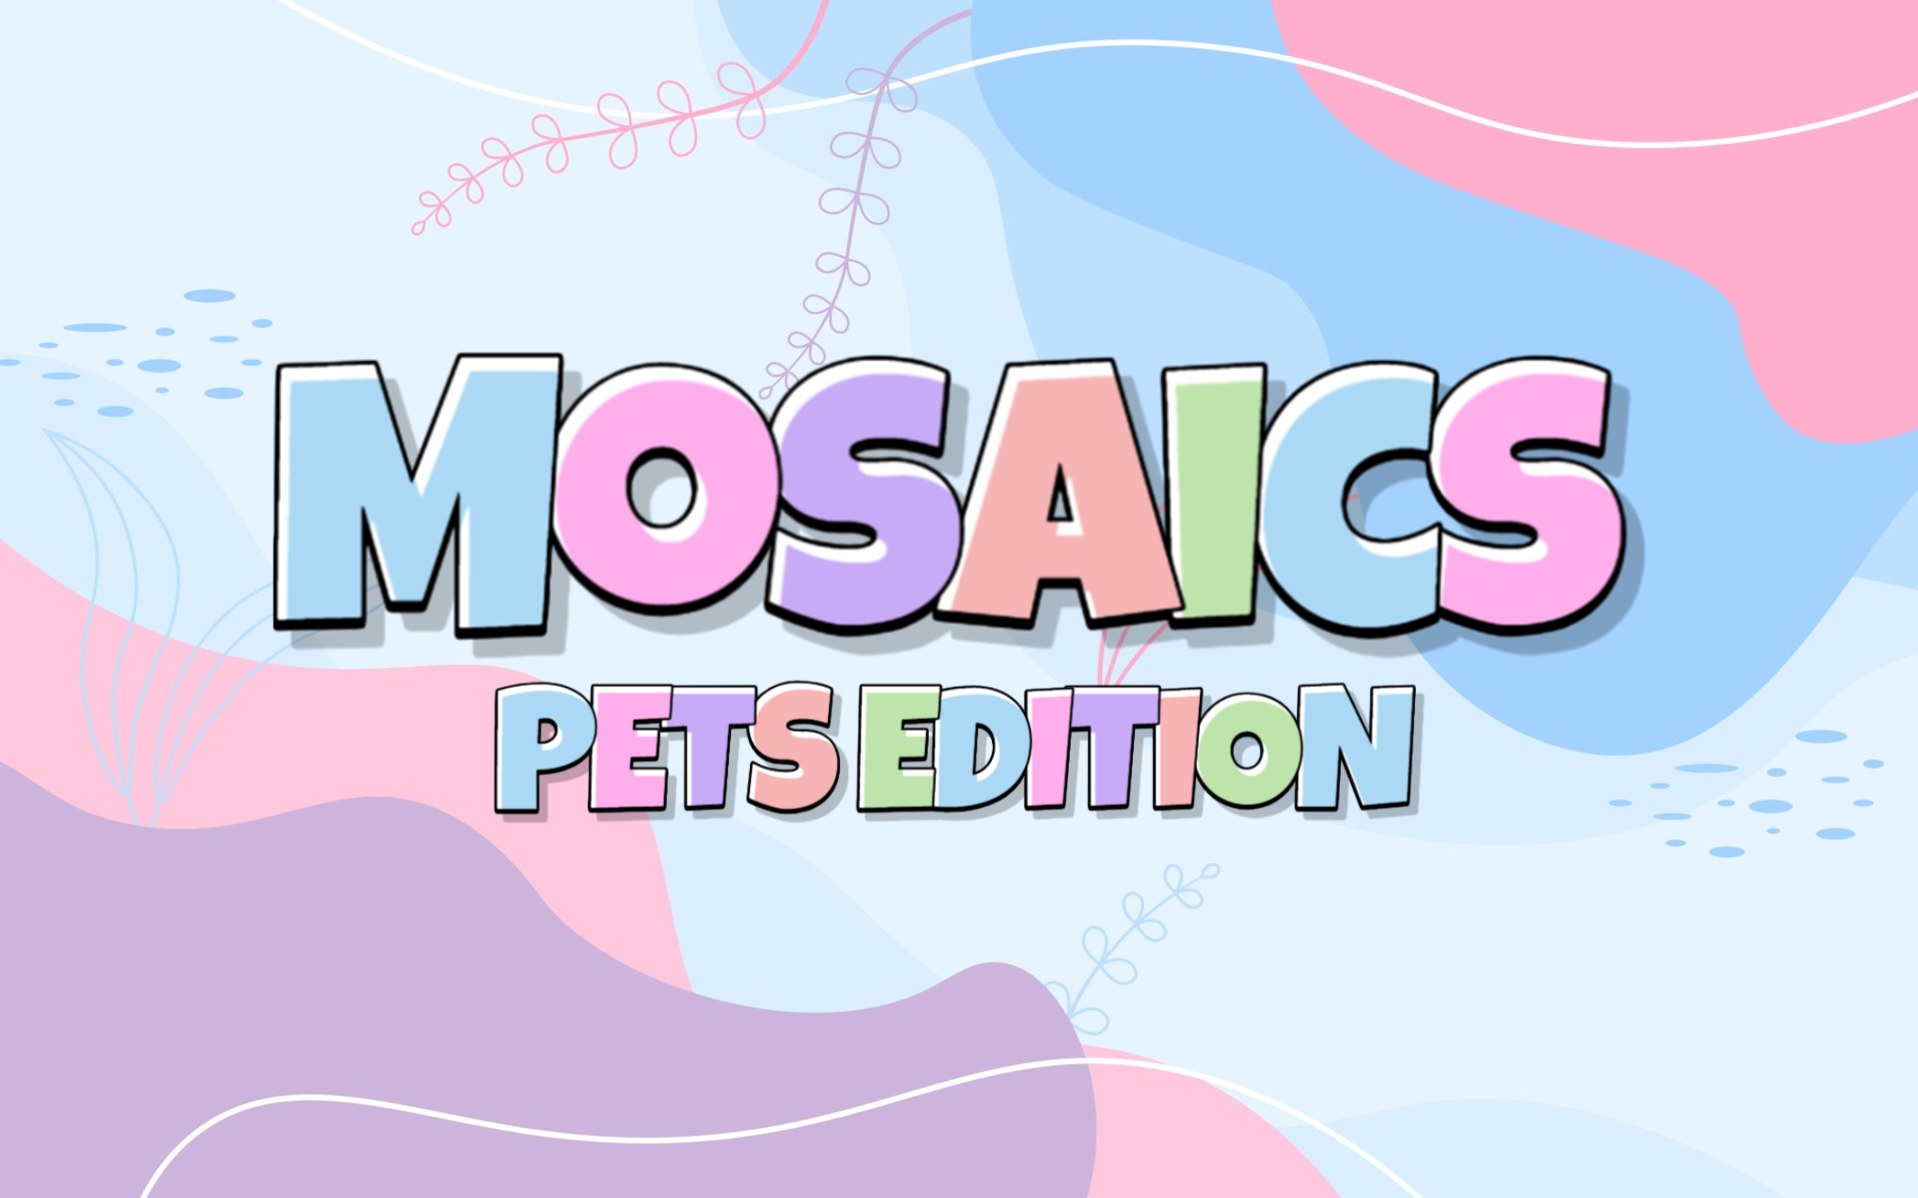 MosaicsPets